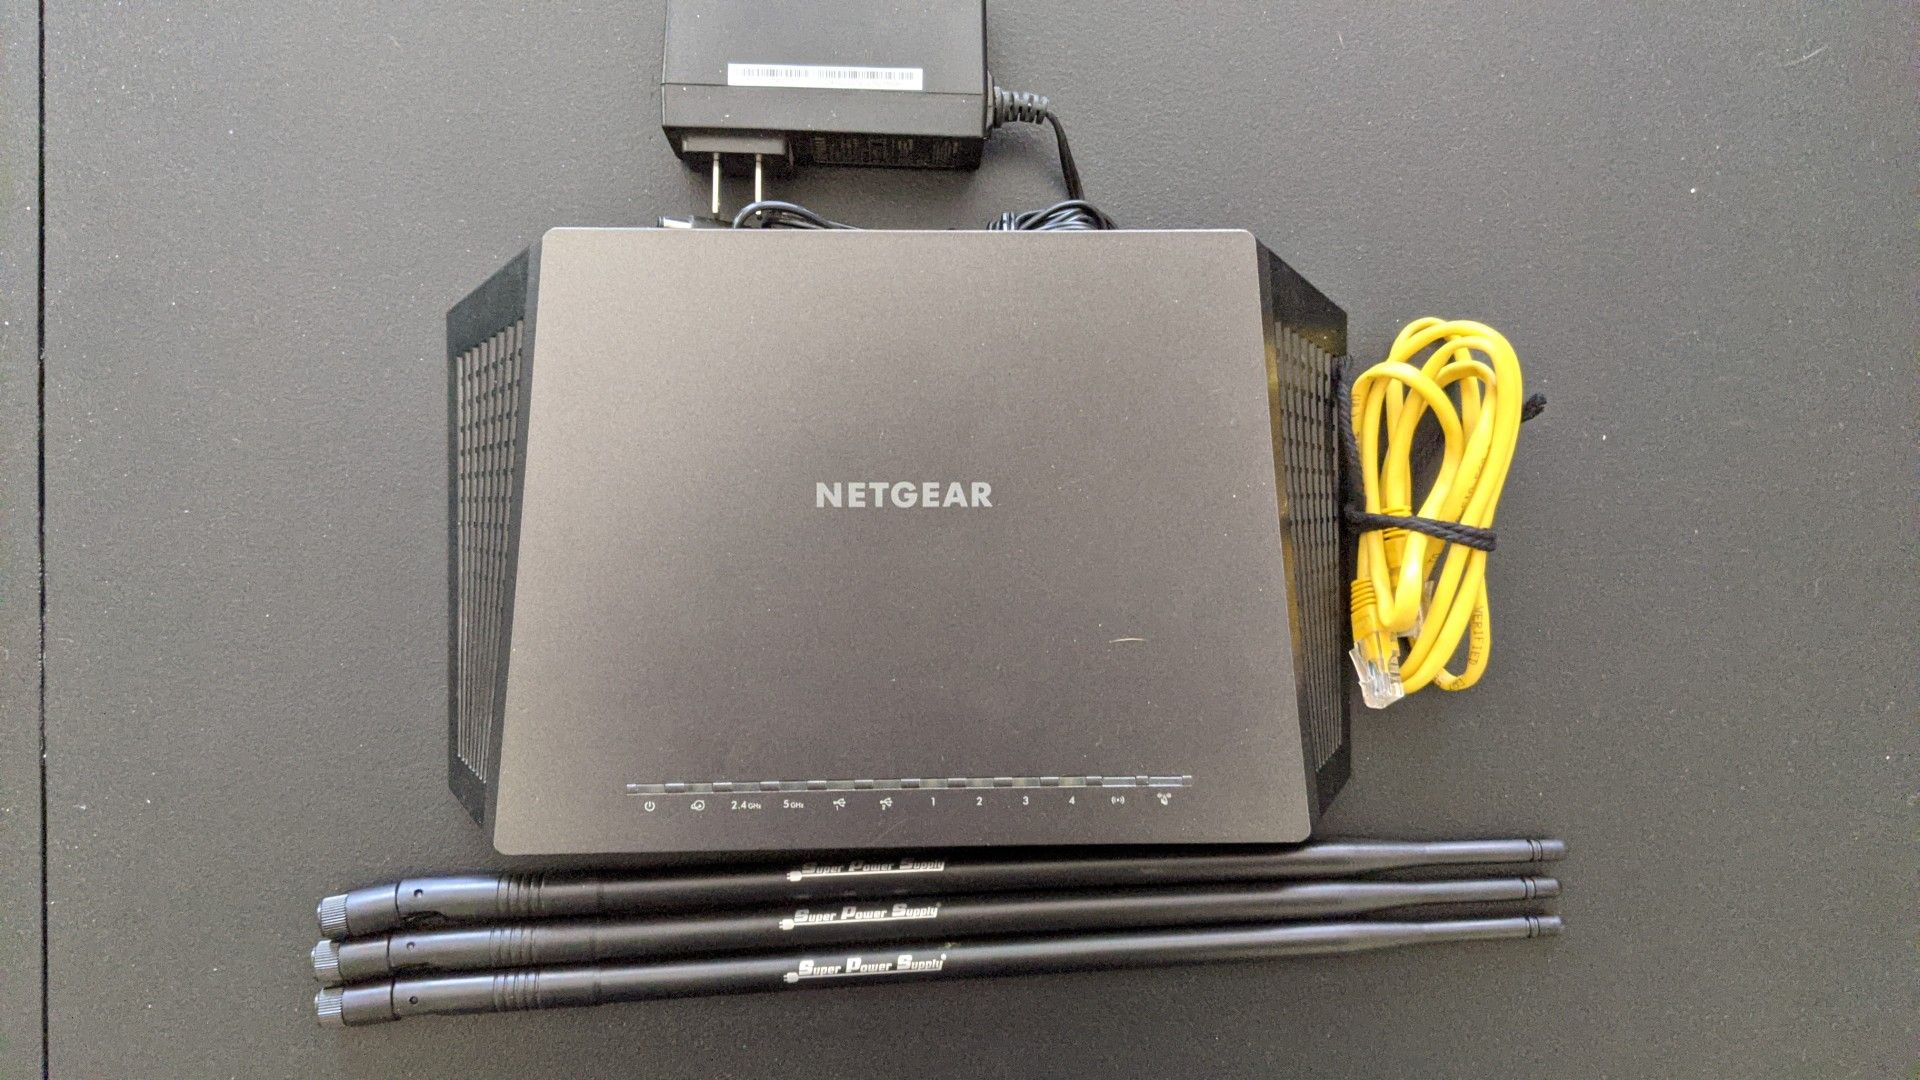 Netgear Nighthawk R7000 WIFI Router w/ Extended Range Antennas